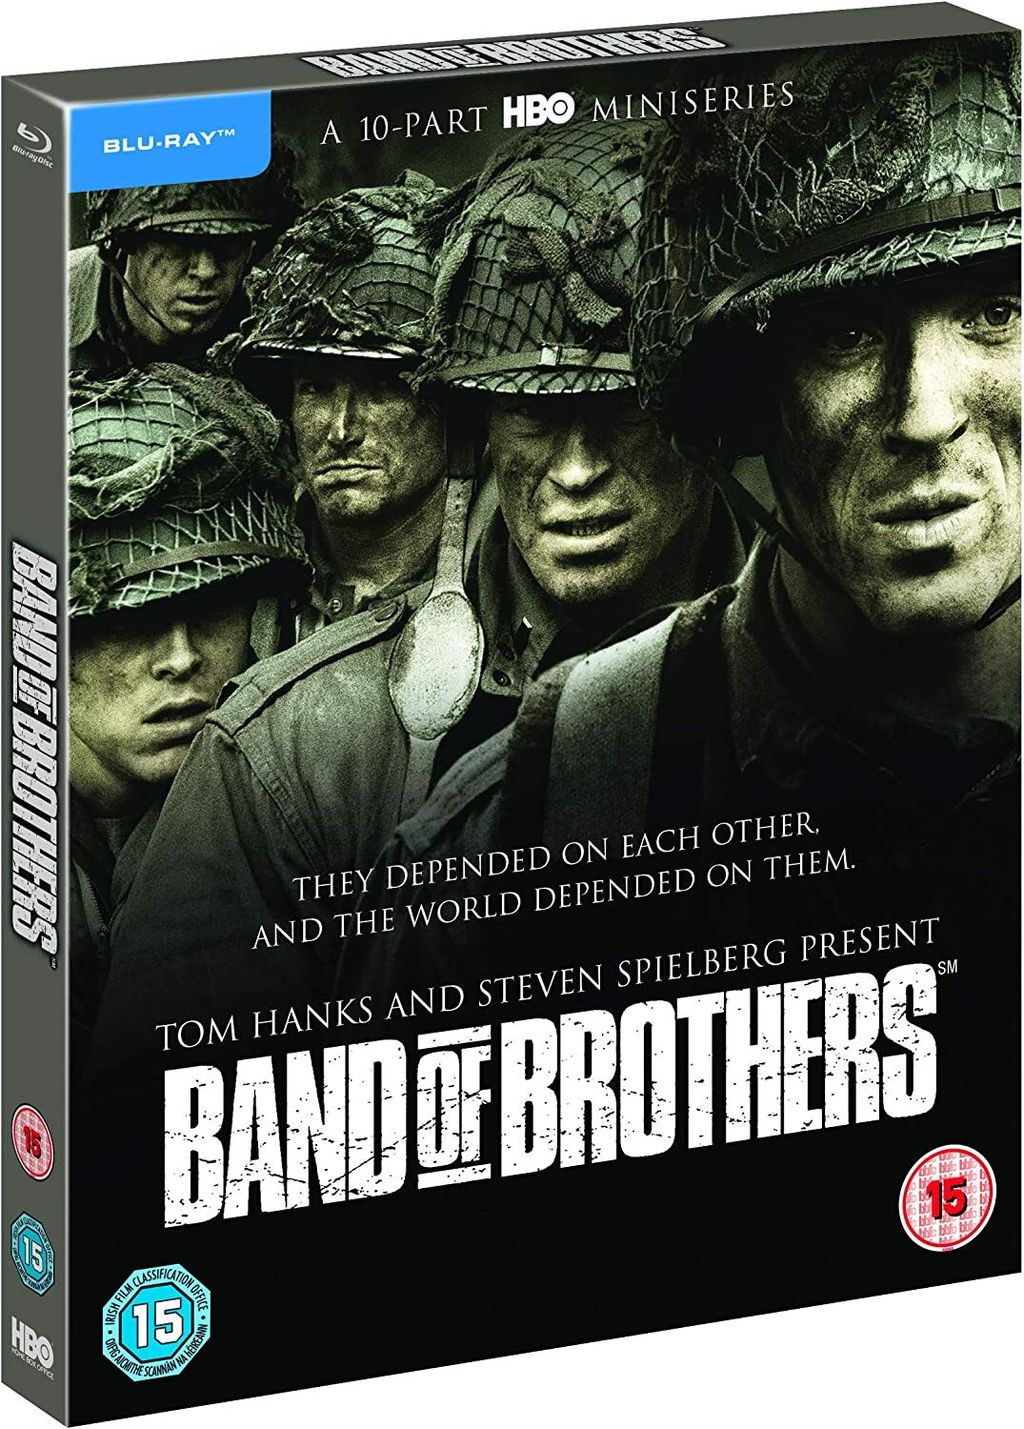 BAND OF BROTHERS [Blu-ray] [Region Free] SLIPCASE 6-DISCS.jpg